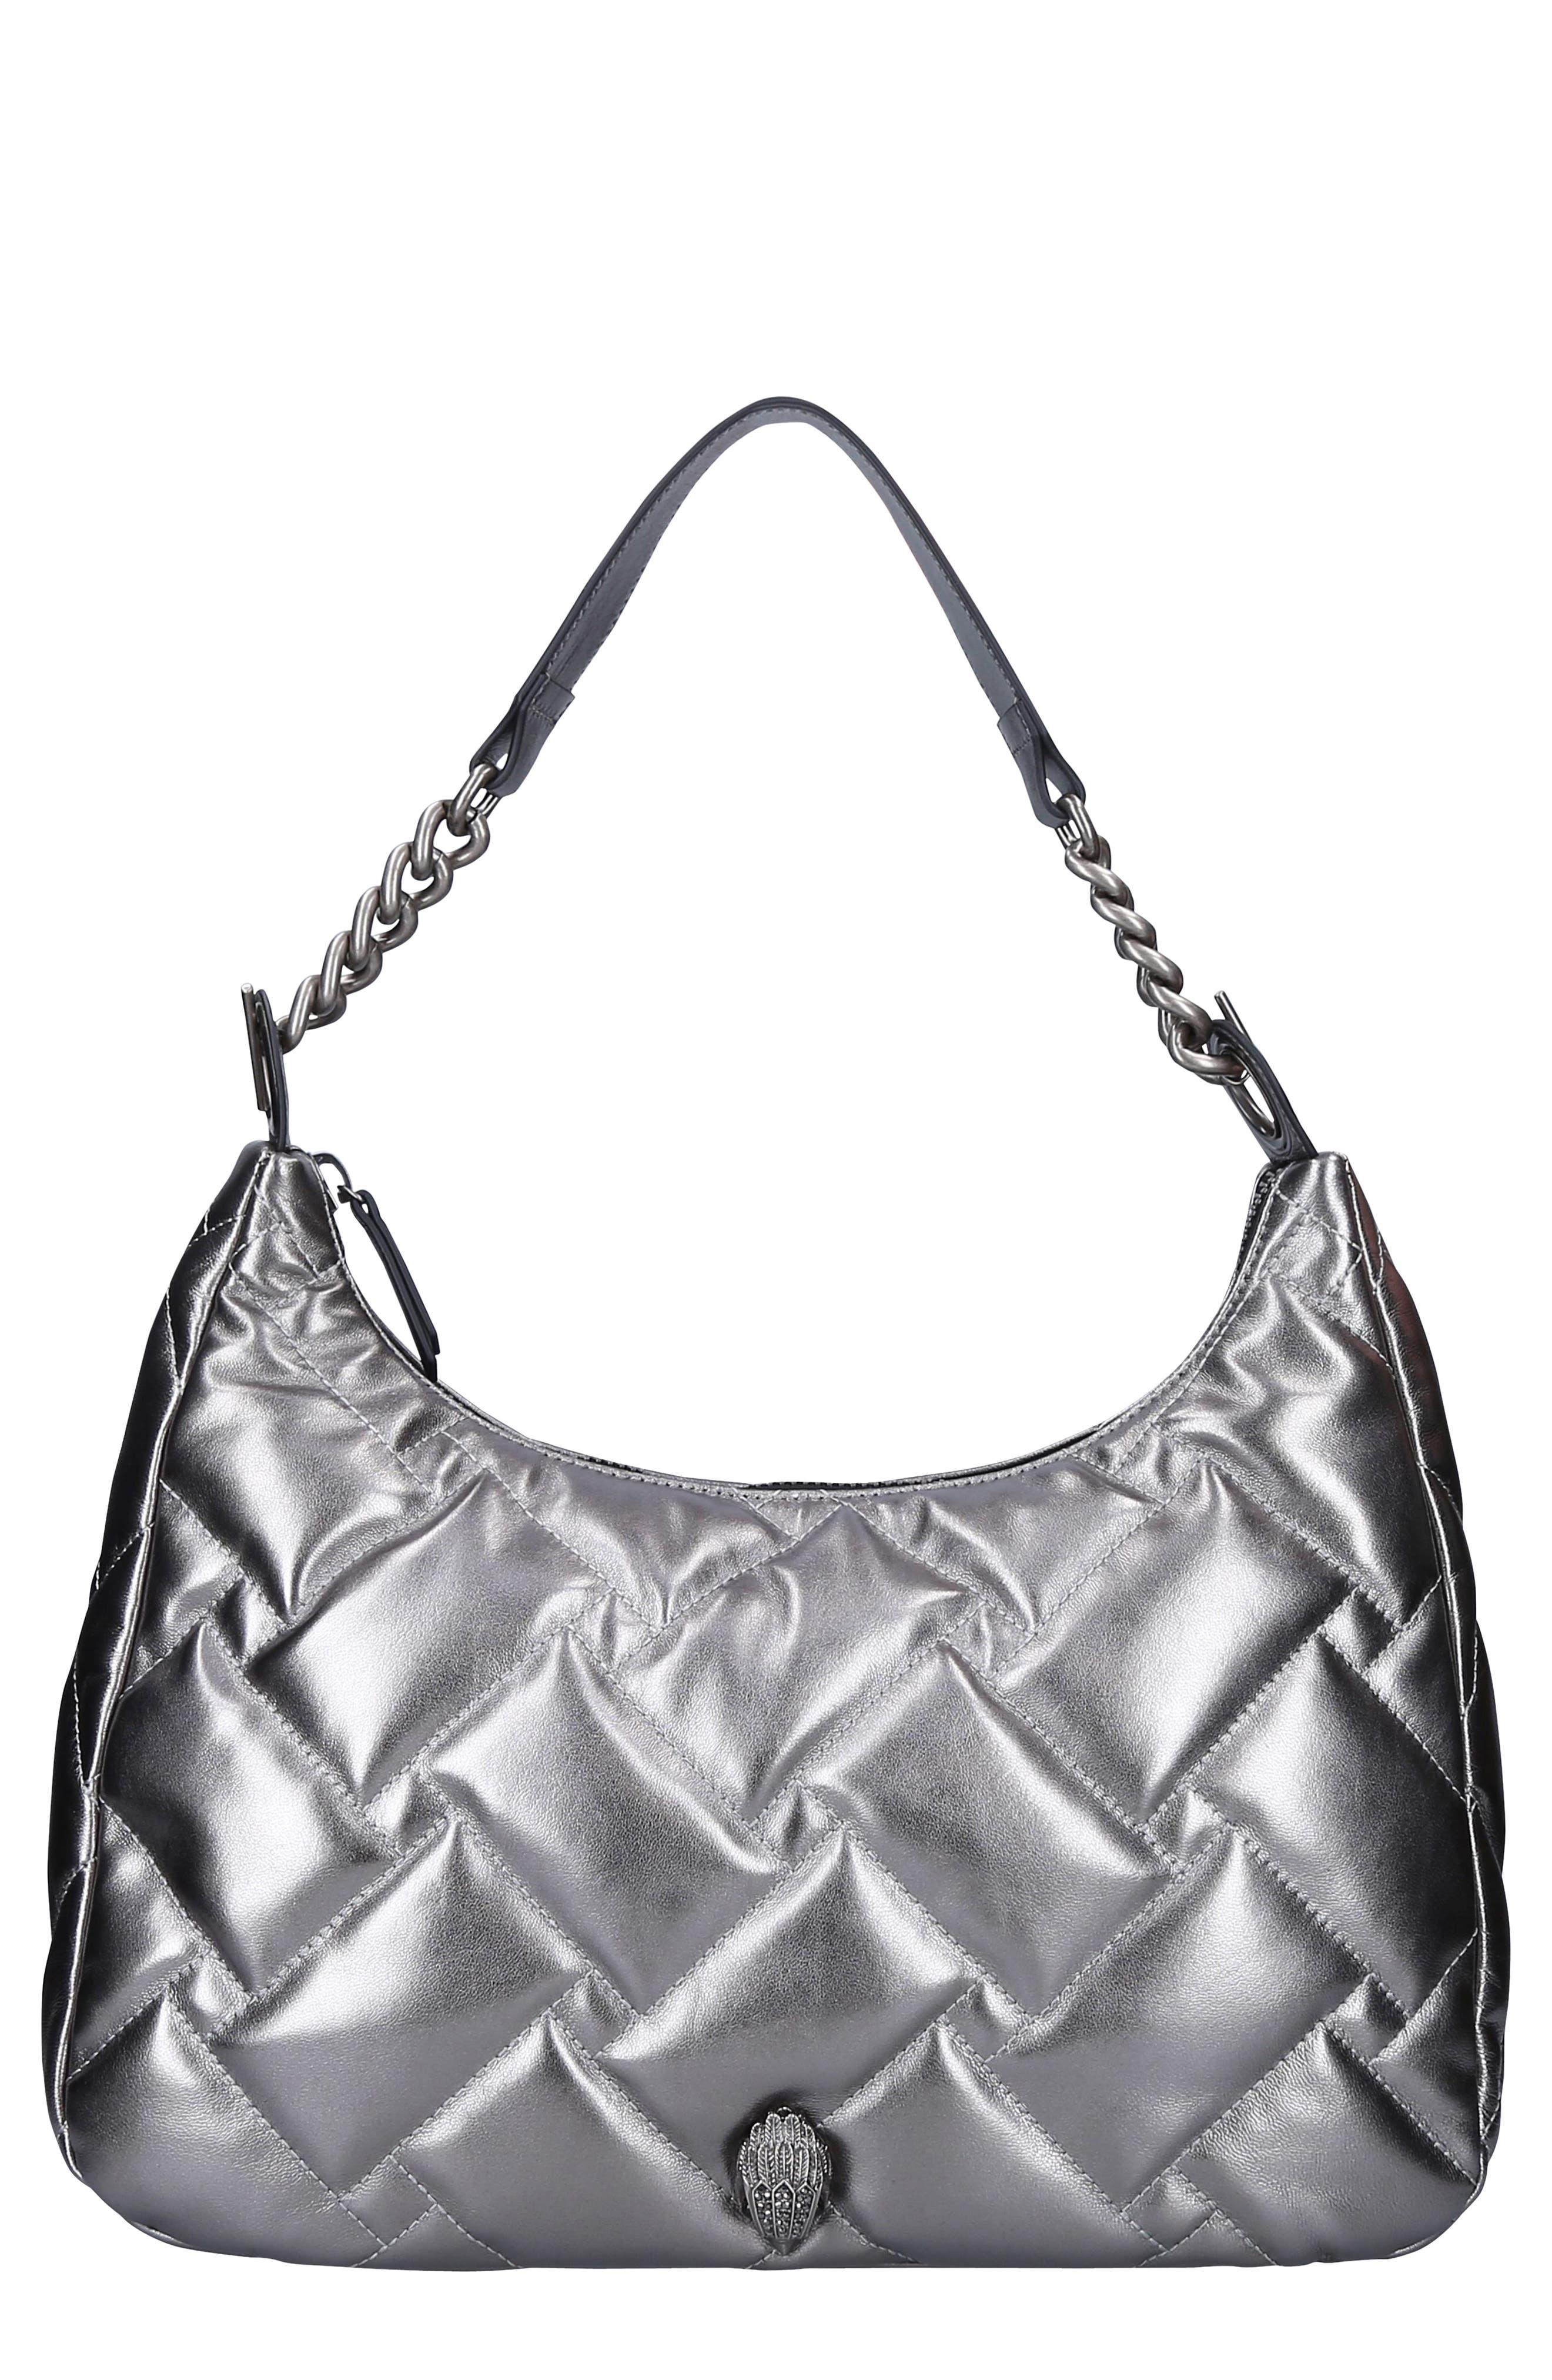 Kurt Geiger Kensington Large Leather Hobo Bag In Silver At